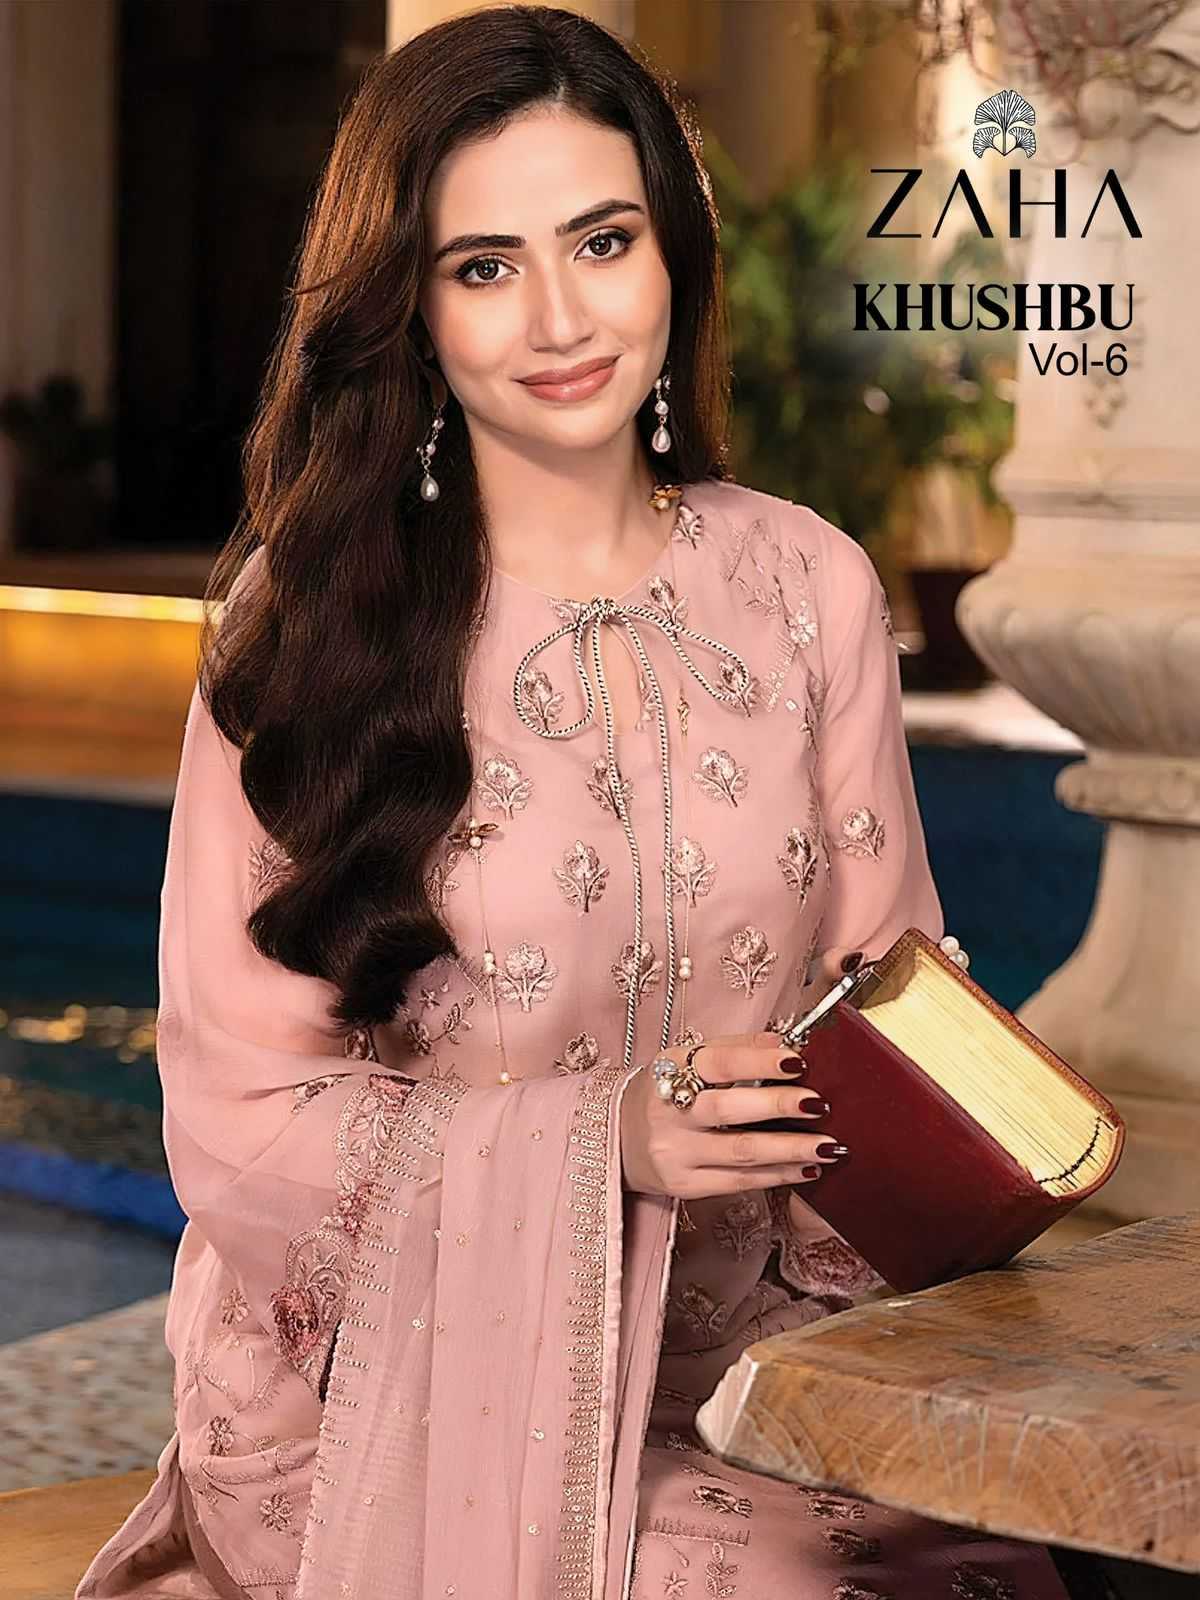 zaha khushbu vol 6 designer pakistani salwar kameez supplier